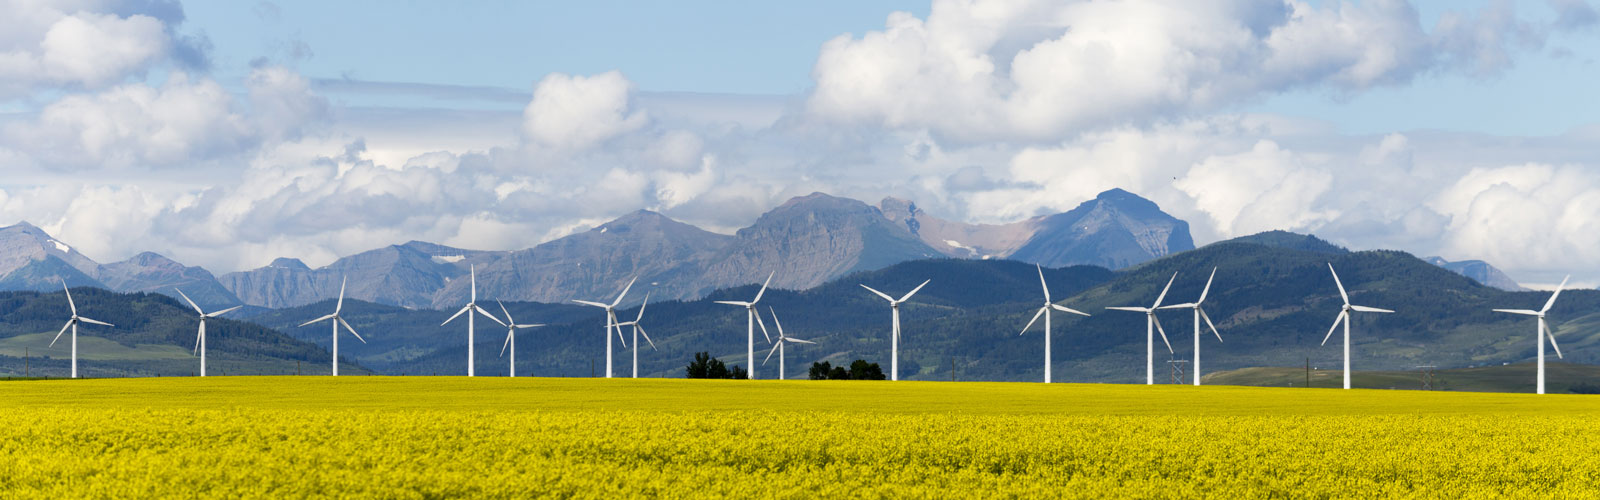 Windmills with mountain backdrop - BLG Alberta Power Market